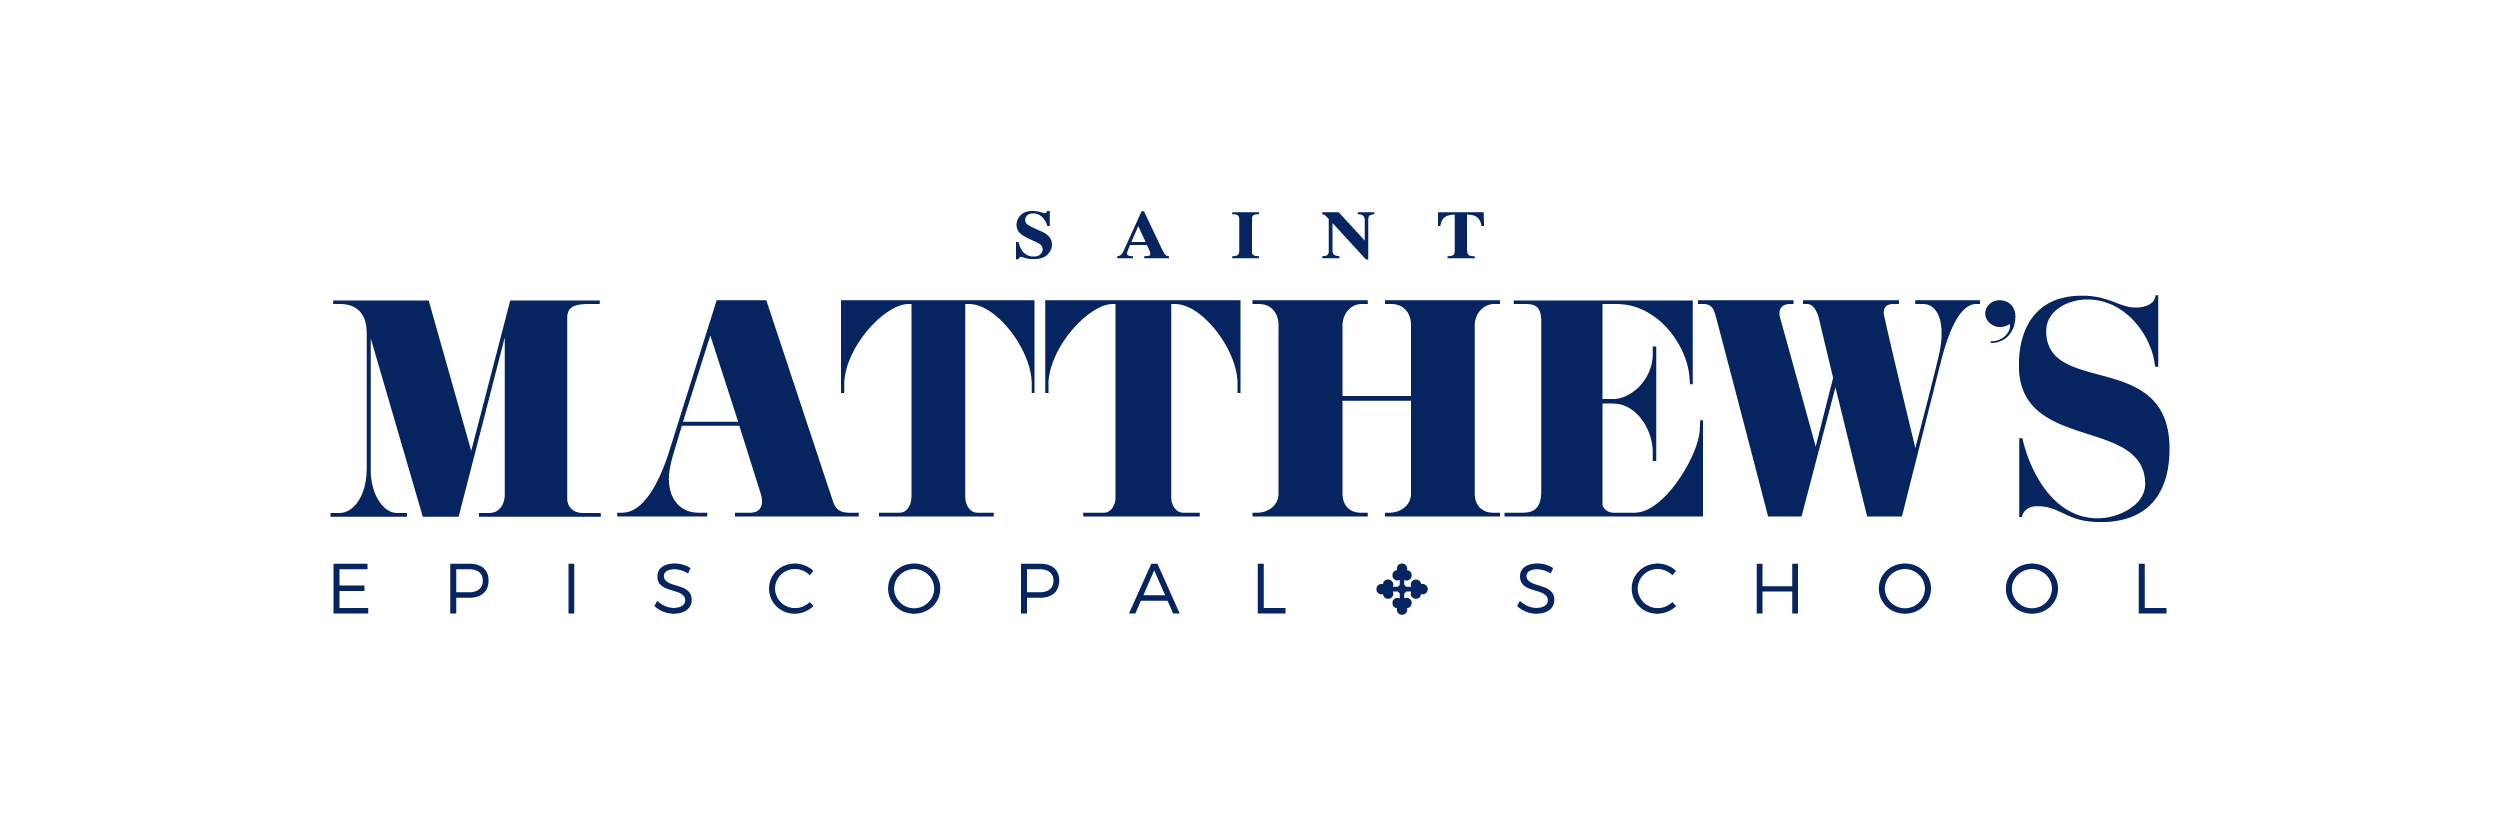 St Matthew's Episcopal School